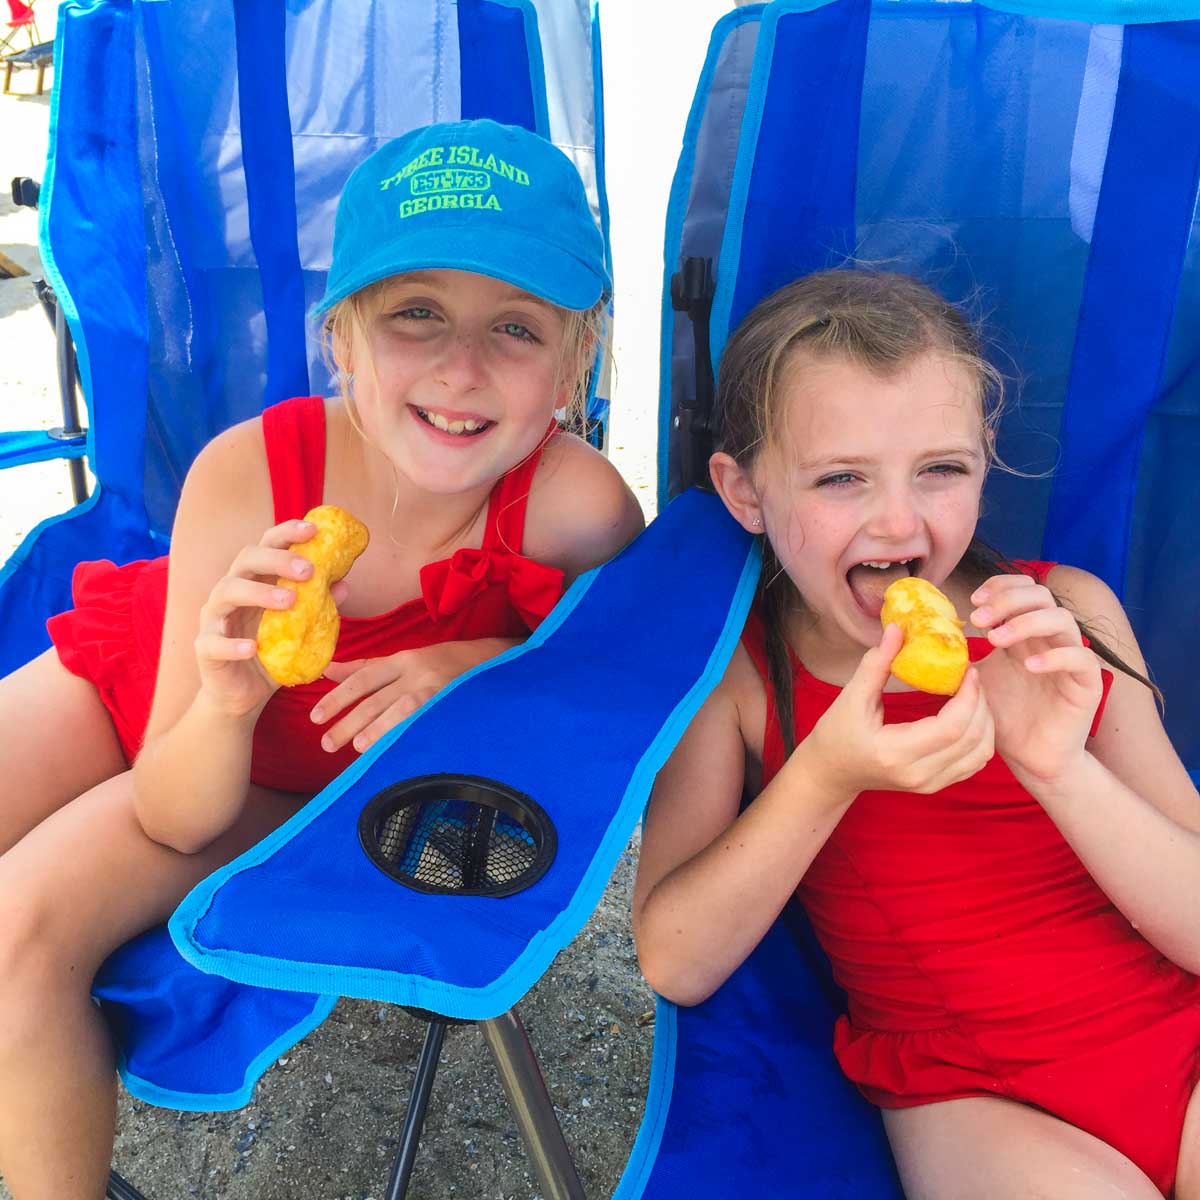 Two young girls enjoying Twinkies in beach chairs.